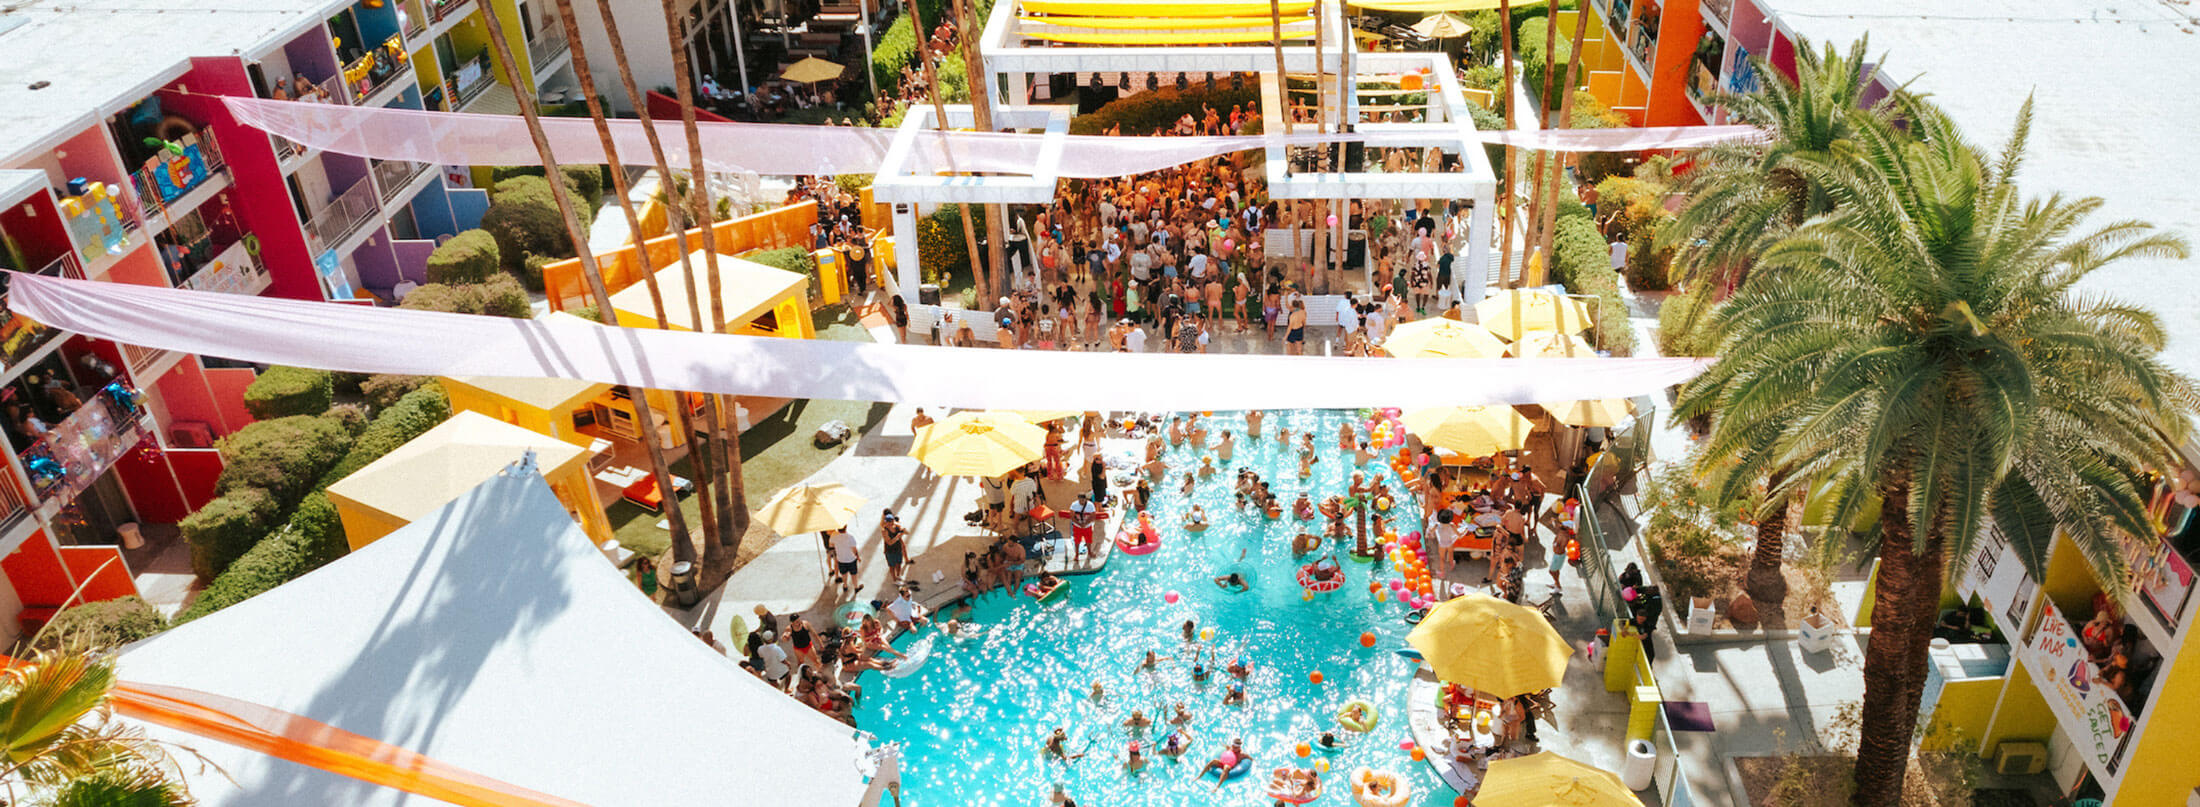 8 Best Pool Parties in Palm Springs for Summer Fun